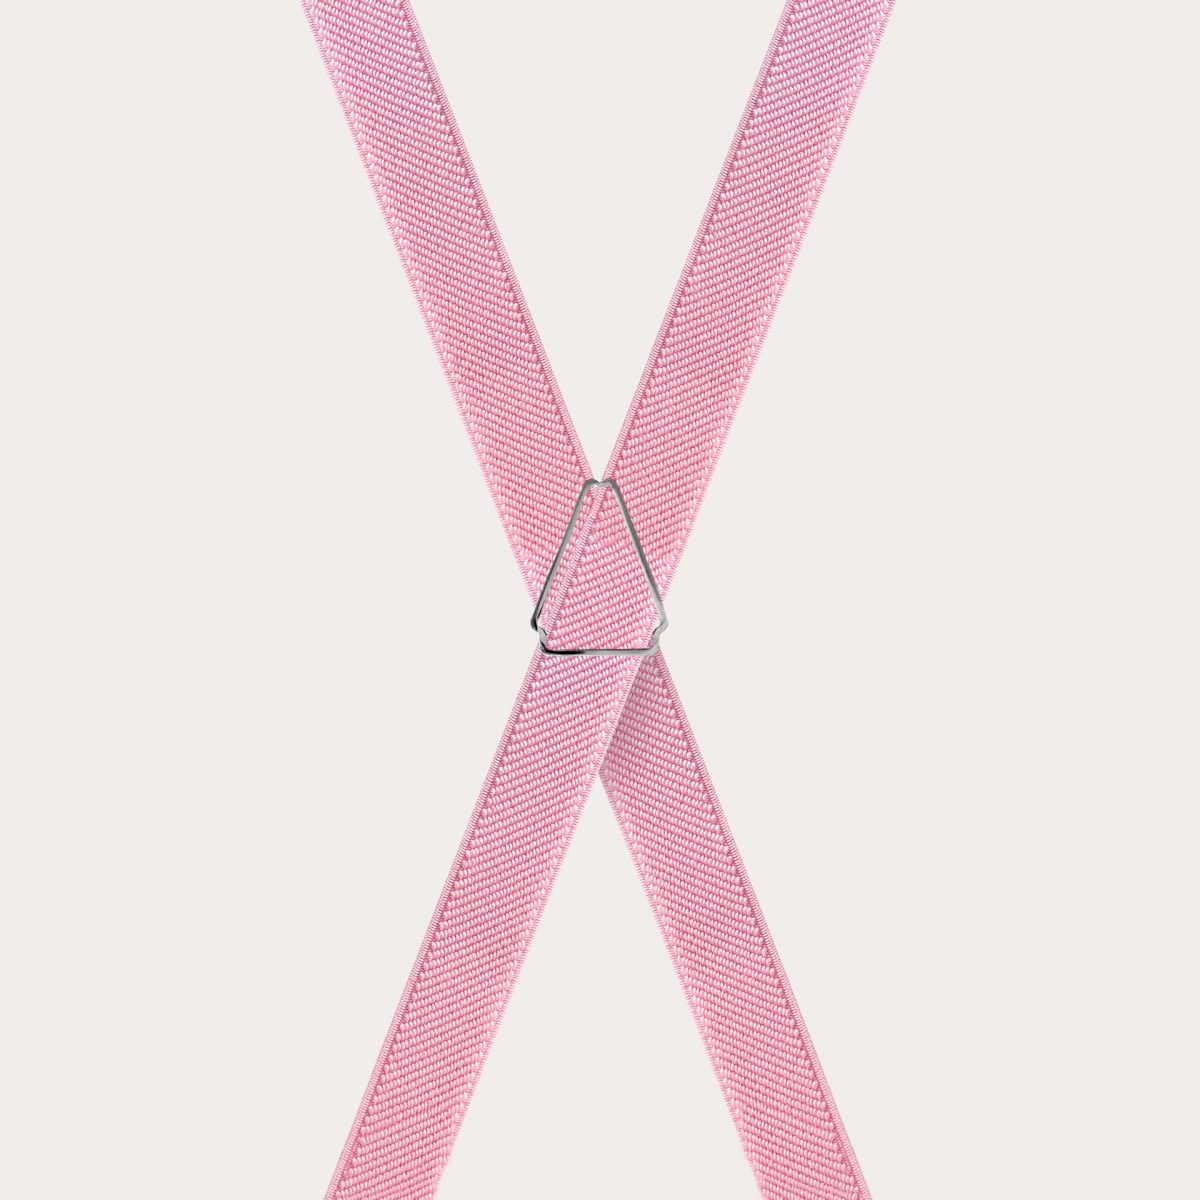 BRUCLE Tirantes unisex finos, rosa pastel